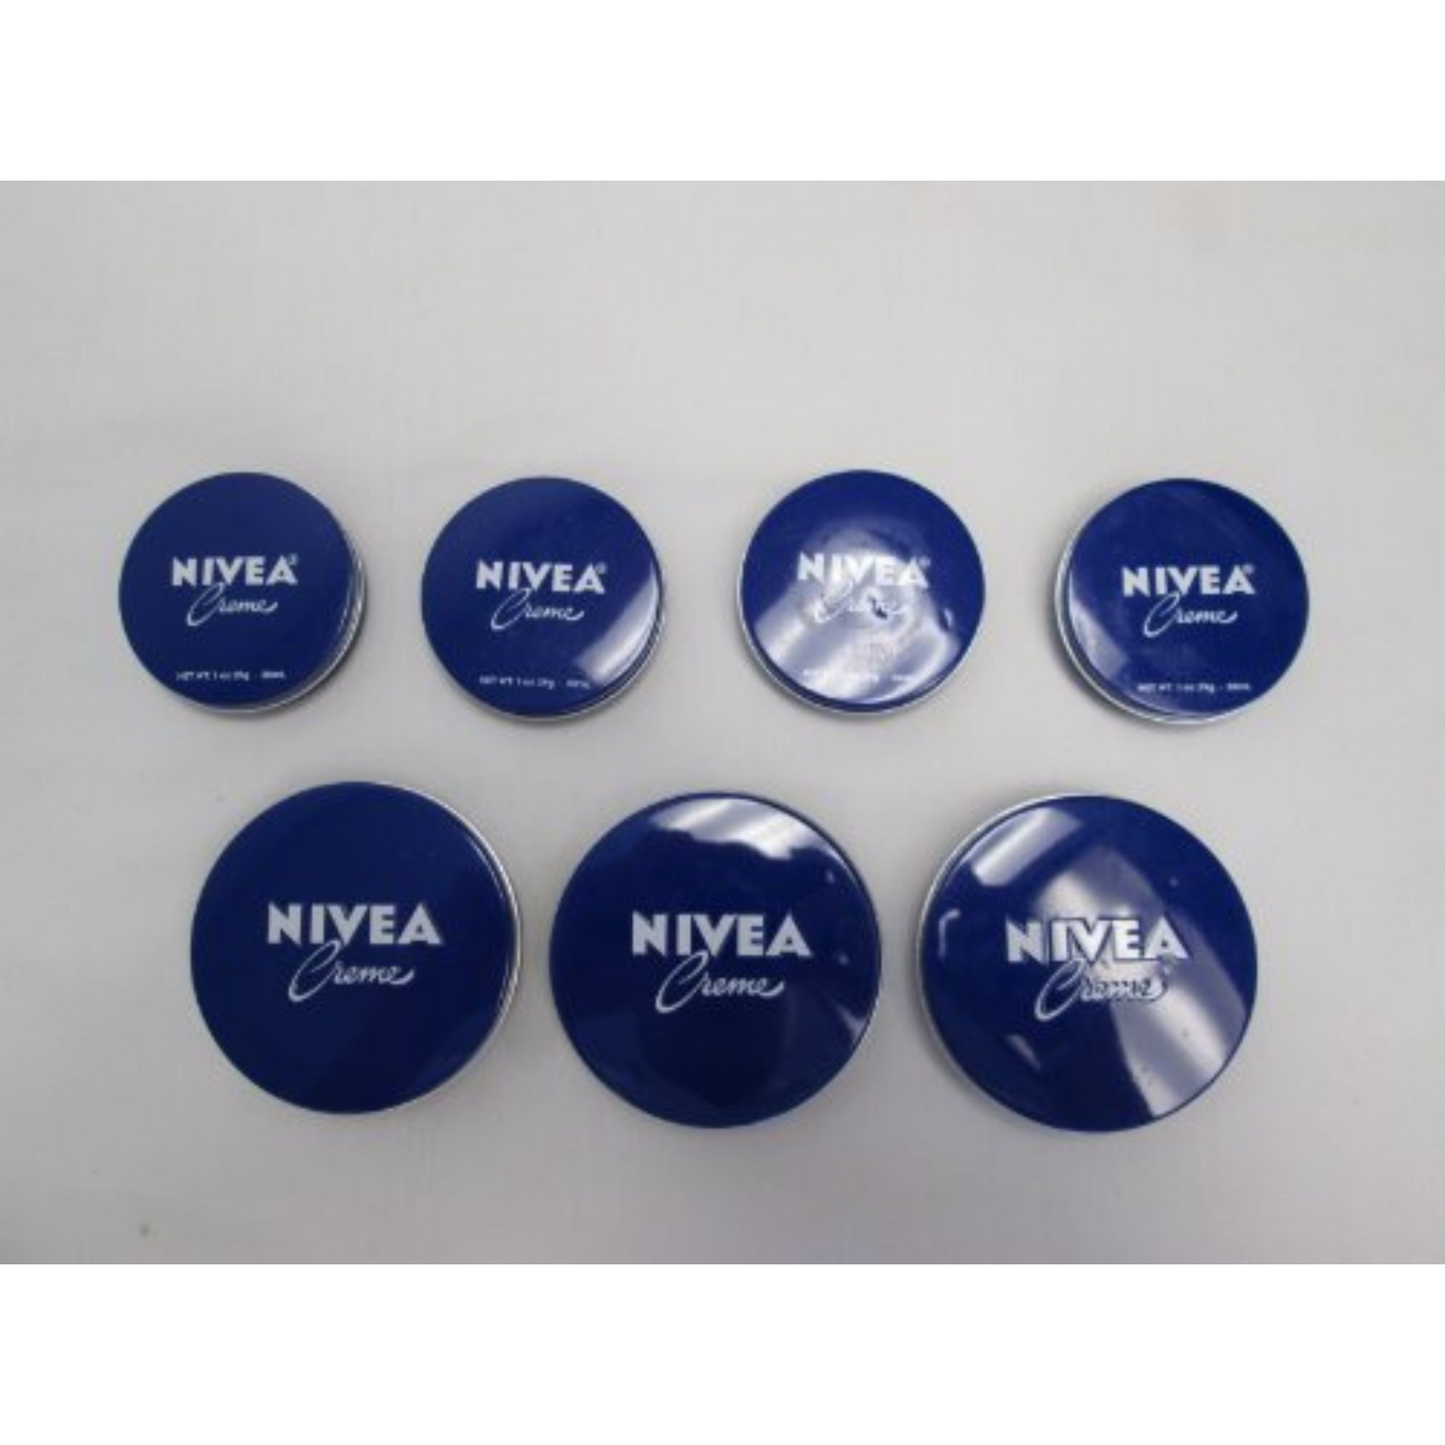 Nivea Cream - 4 sizes